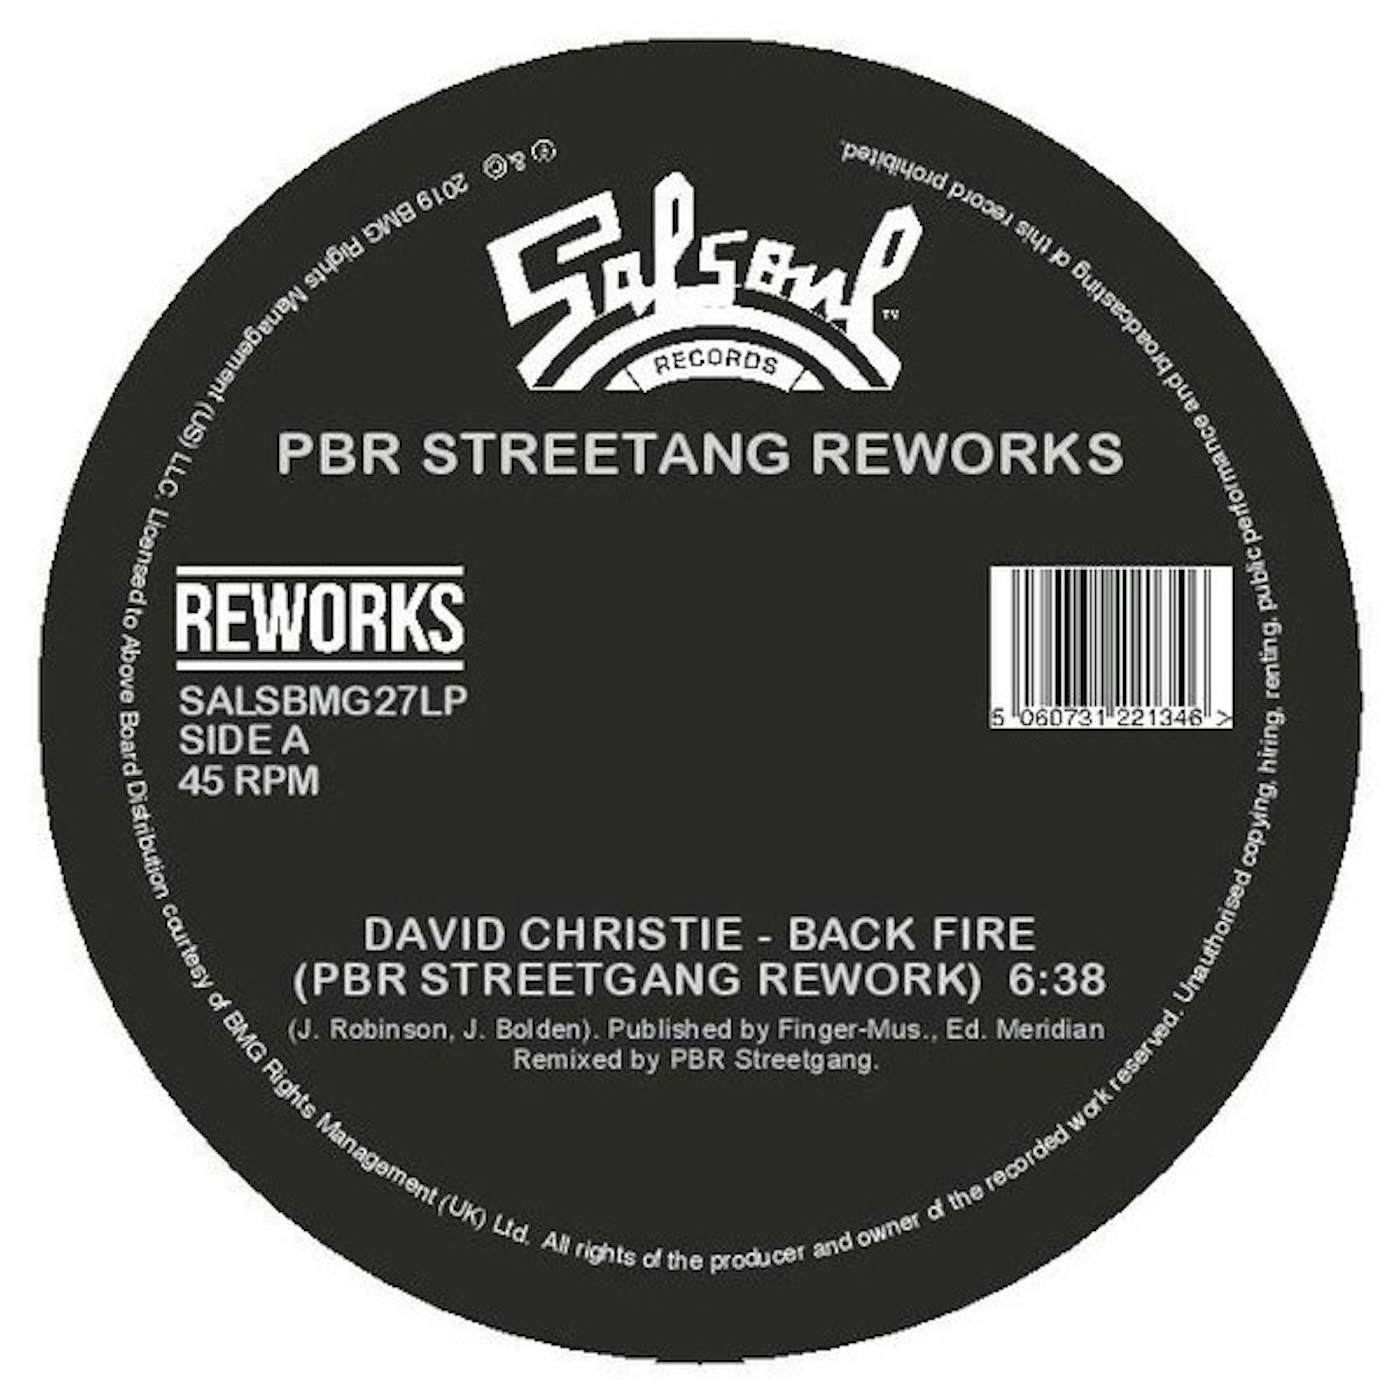 PBR Streetgang SALSOUL REWORKS Vinyl Record